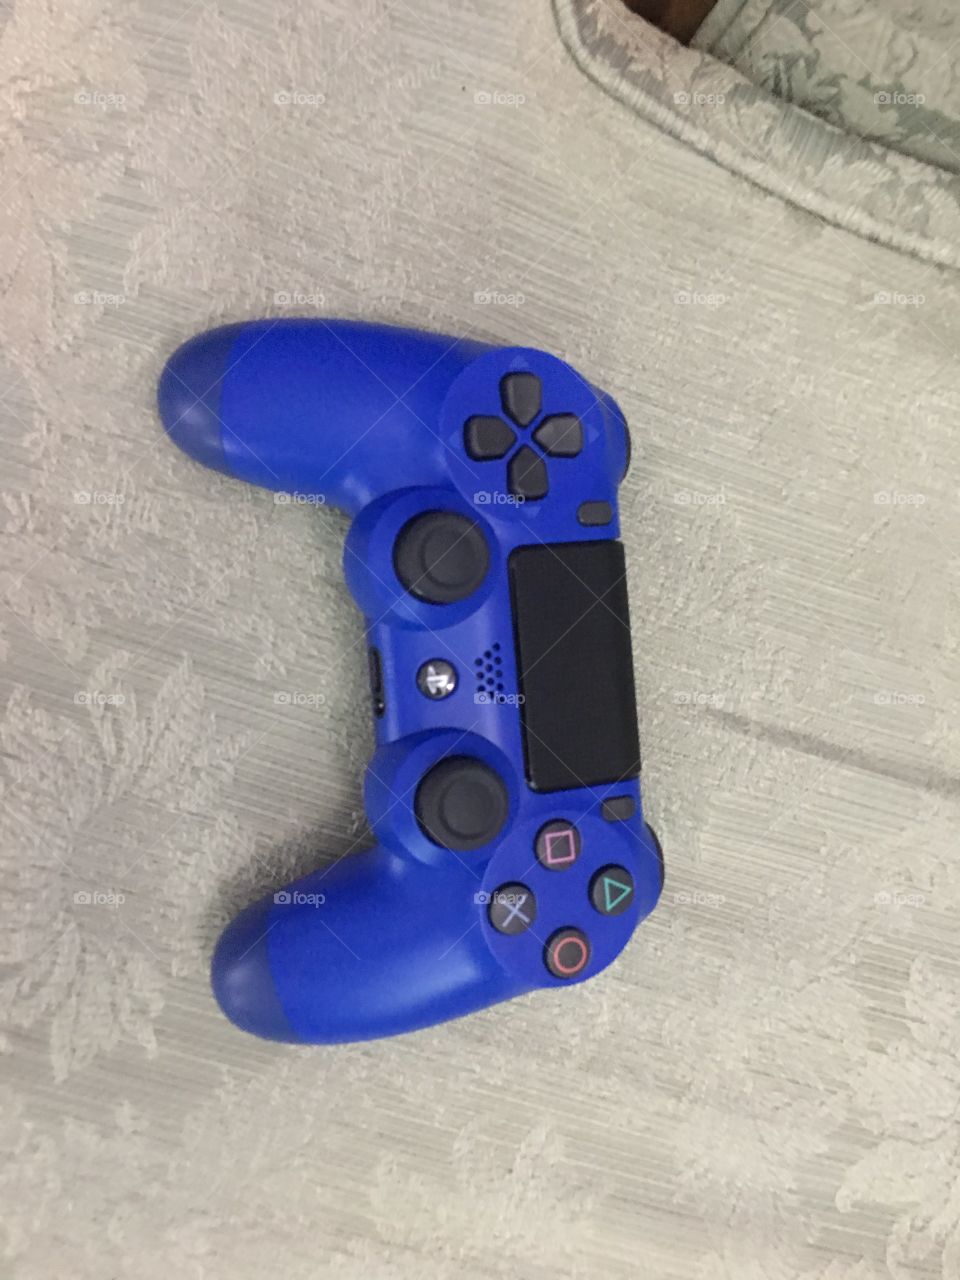 Ps4 blue controller